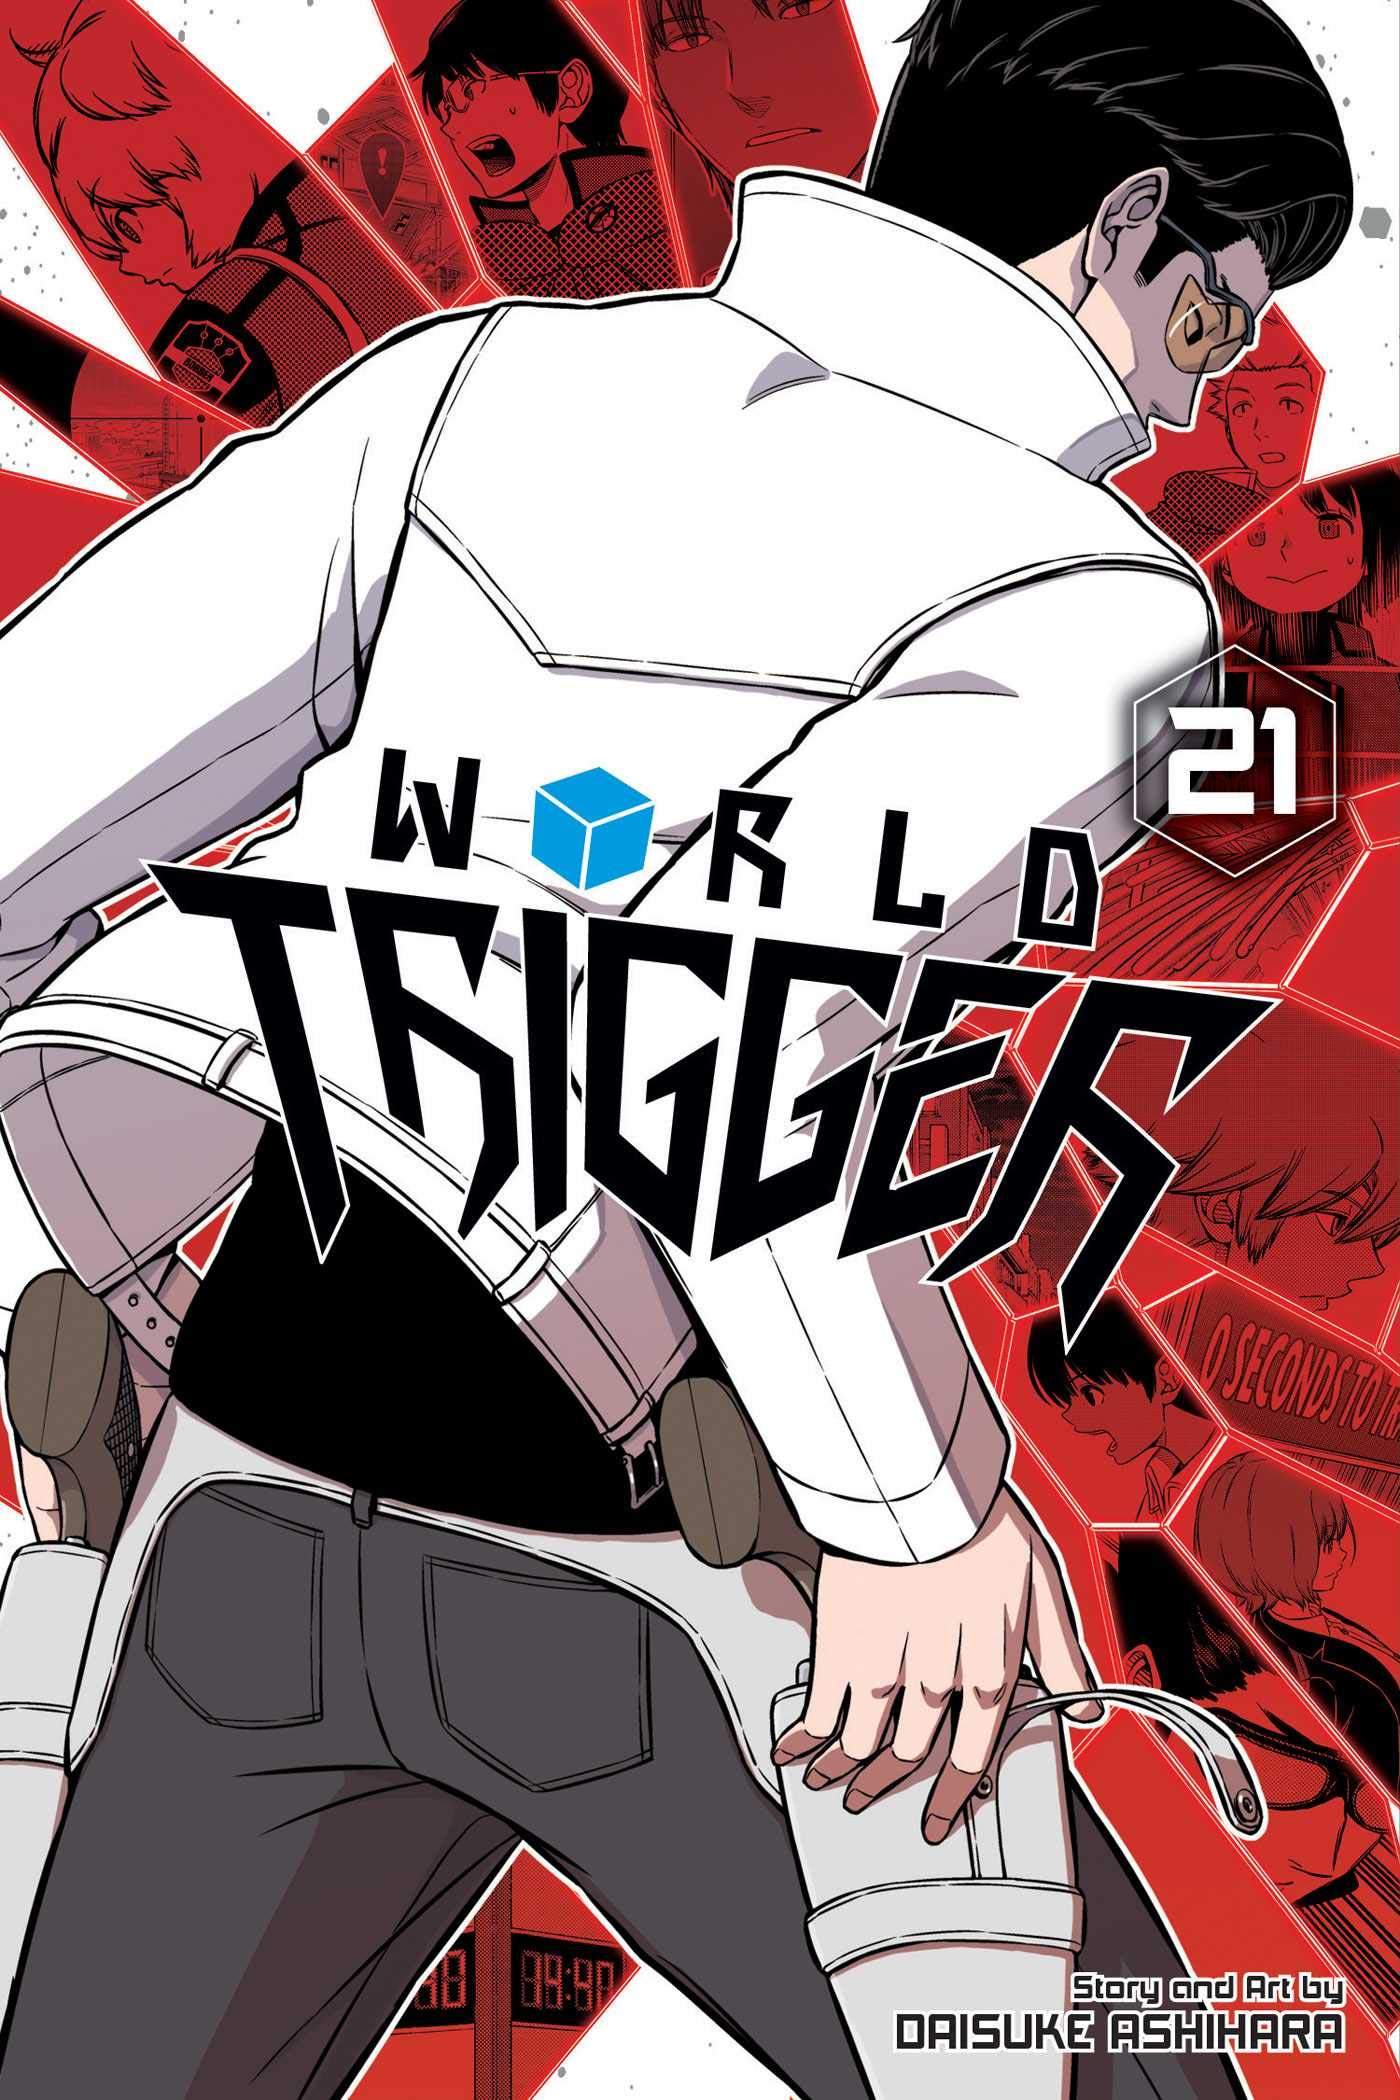 World Trigger - Volume 21 | Daisuke Ashihara